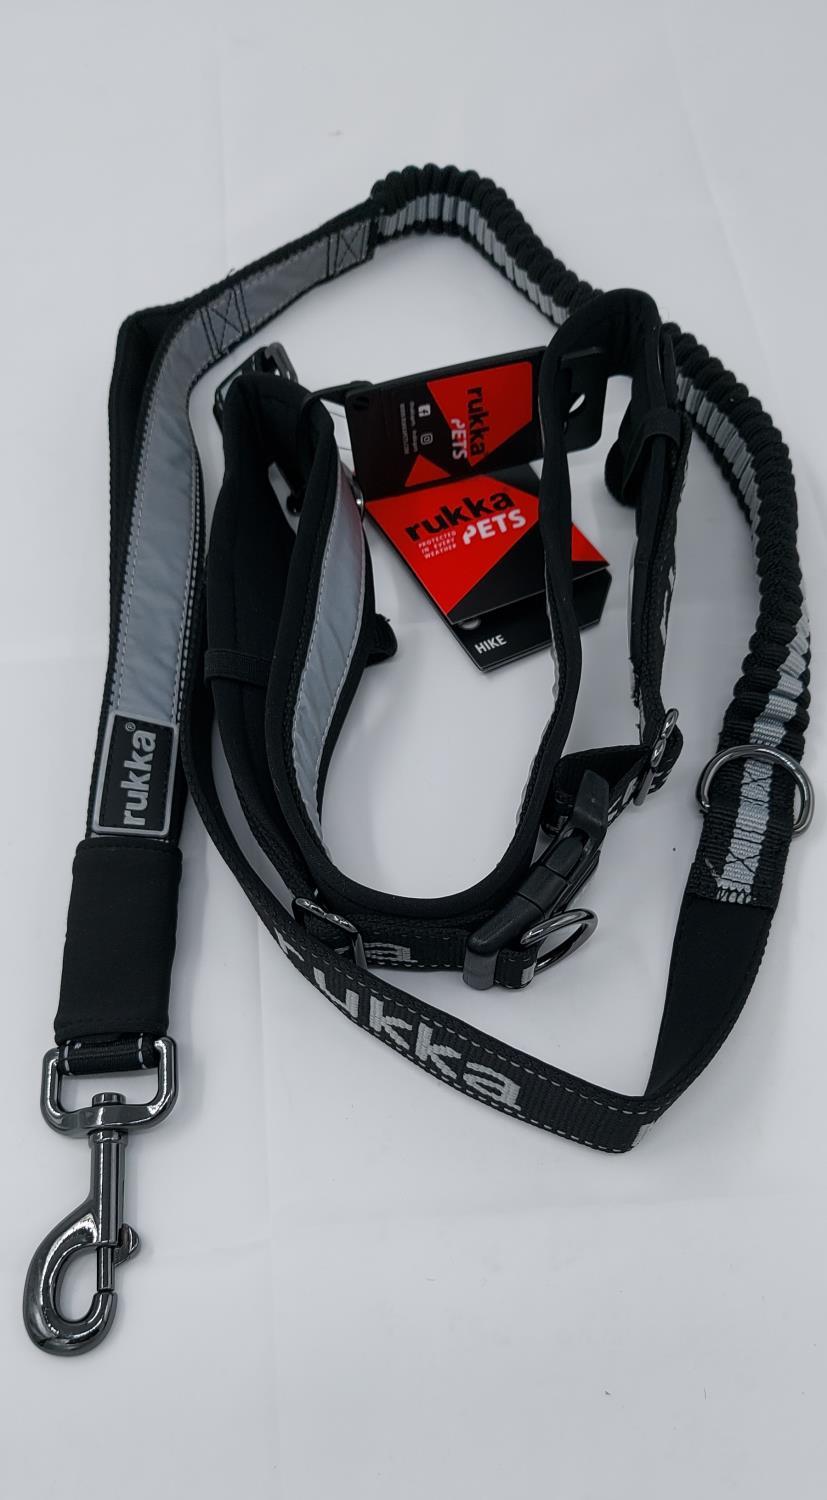 2051 64397 - Rukka Dog running belt hike, black